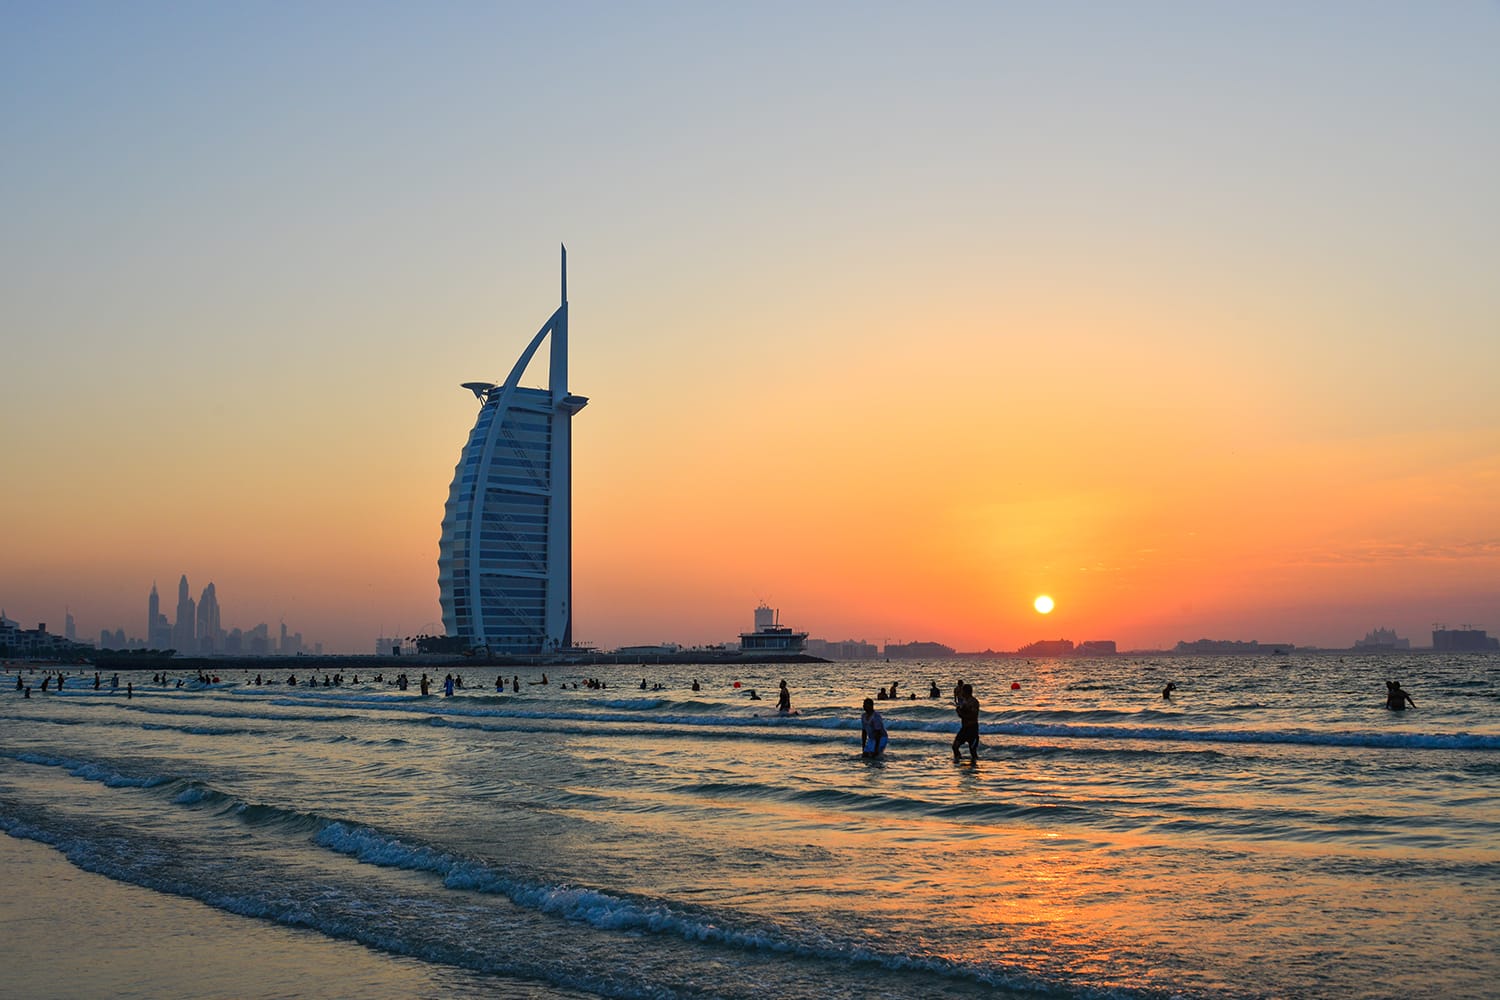 The Burj Al Arab Hotel and beach at sunset.